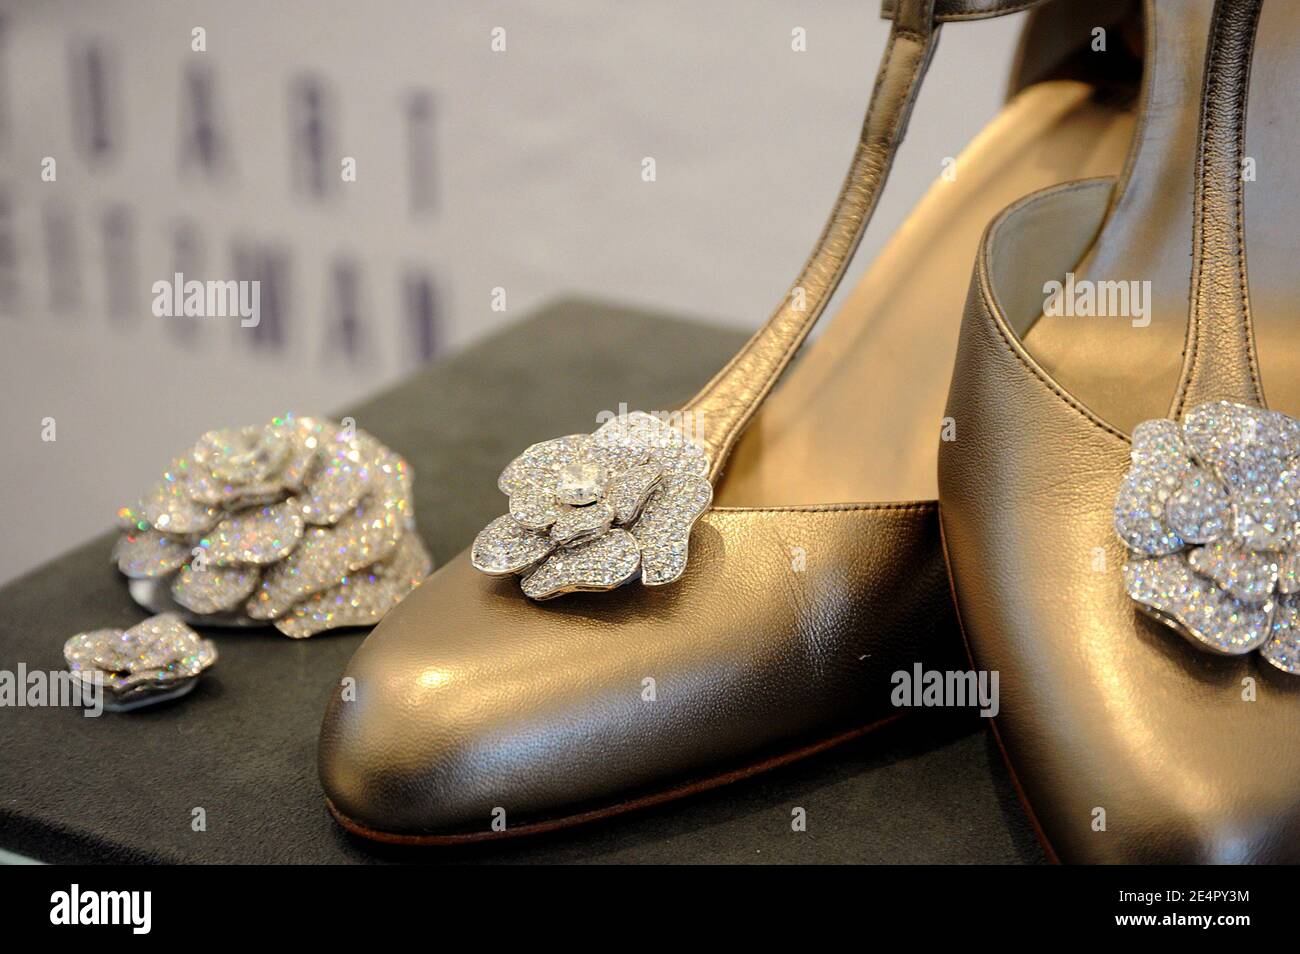 The Stuart Weitzman Retro Rose Kwiat diamond encrusted shoes worth over $1  million to be worn be writer-director Academy Award nominee Diablo Cody, on  display in the Stuart Weitzman Rodeo Drive Store